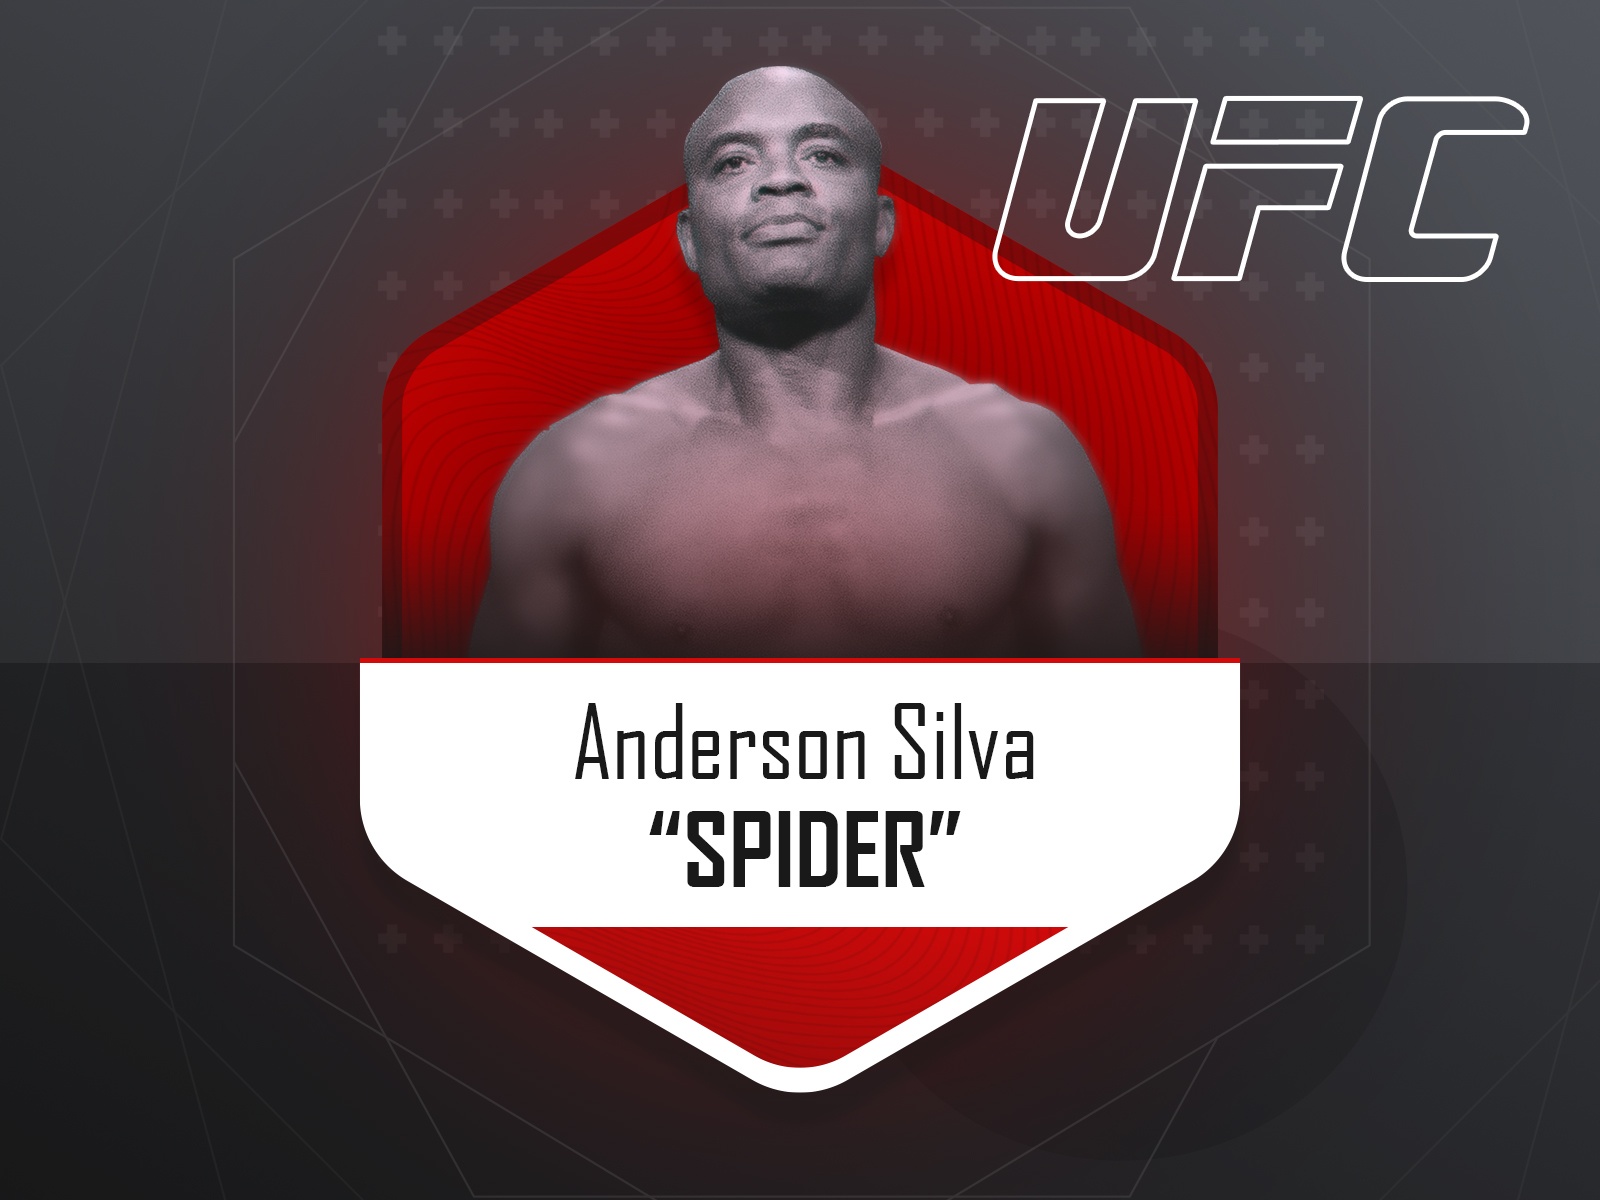 Anderson Silva - UFC fighter